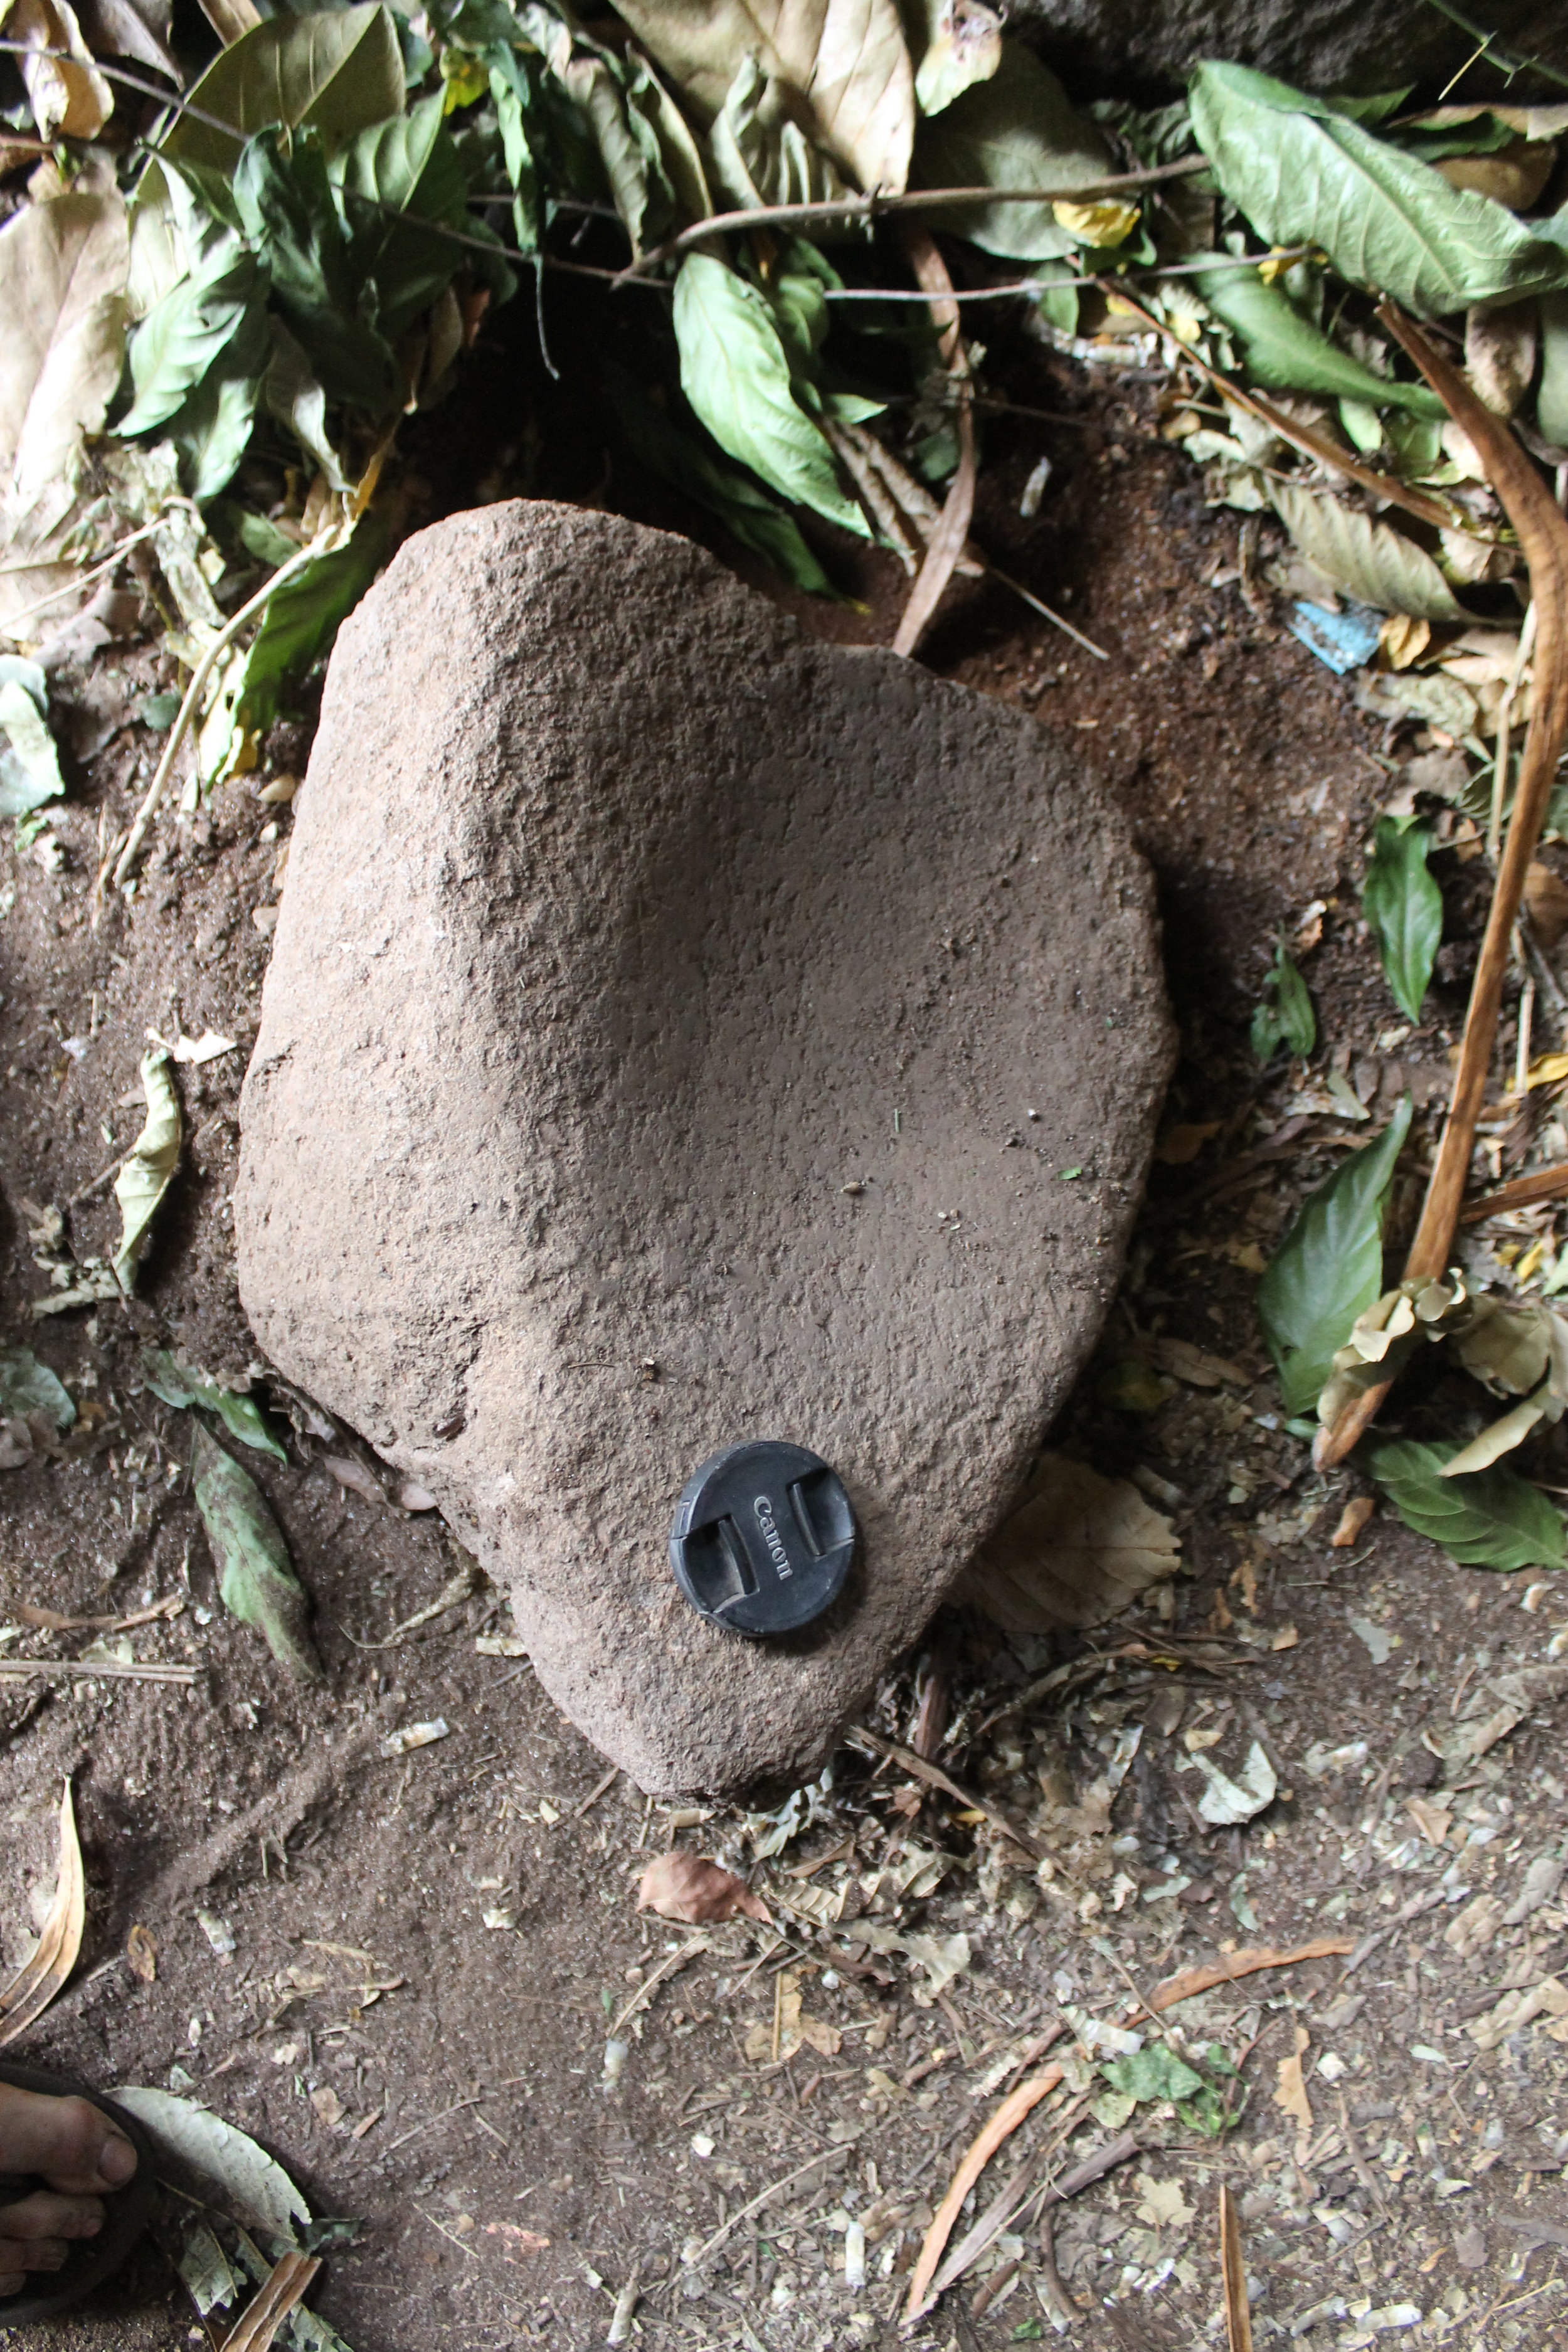 Grindstones are common around the site